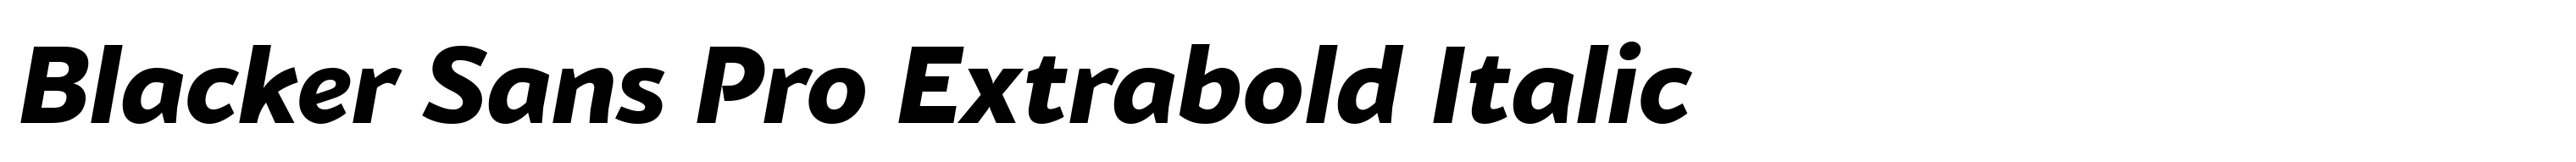 Blacker Sans Pro Extrabold Italic